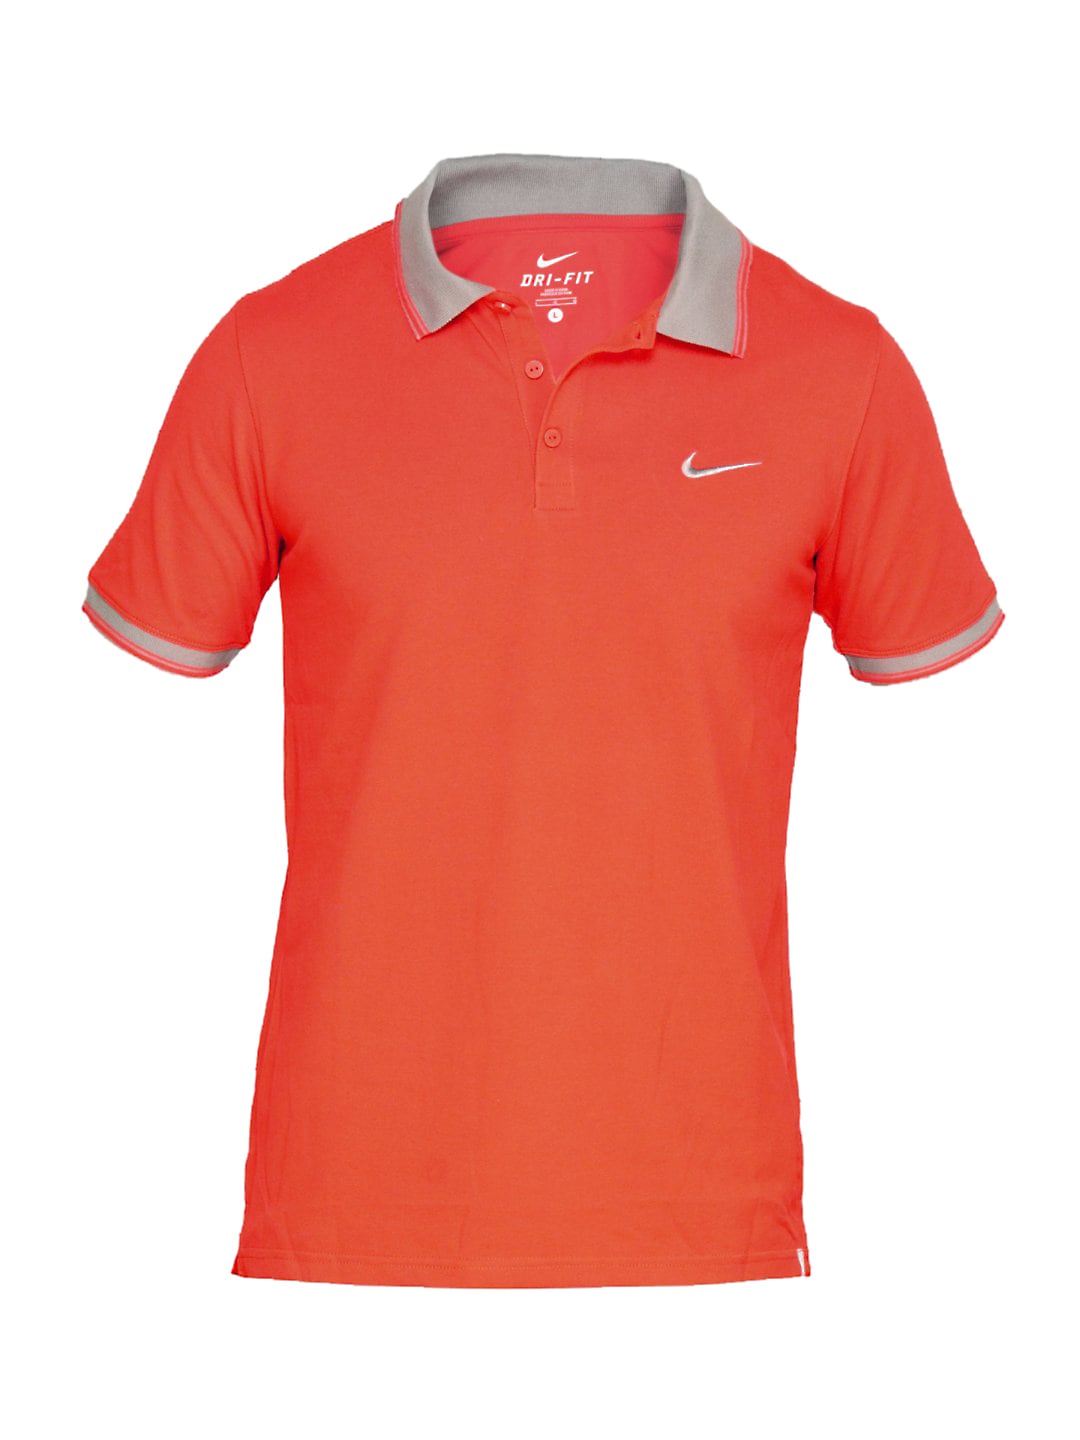 Nike Men's Pique Red Polo T-Shirt